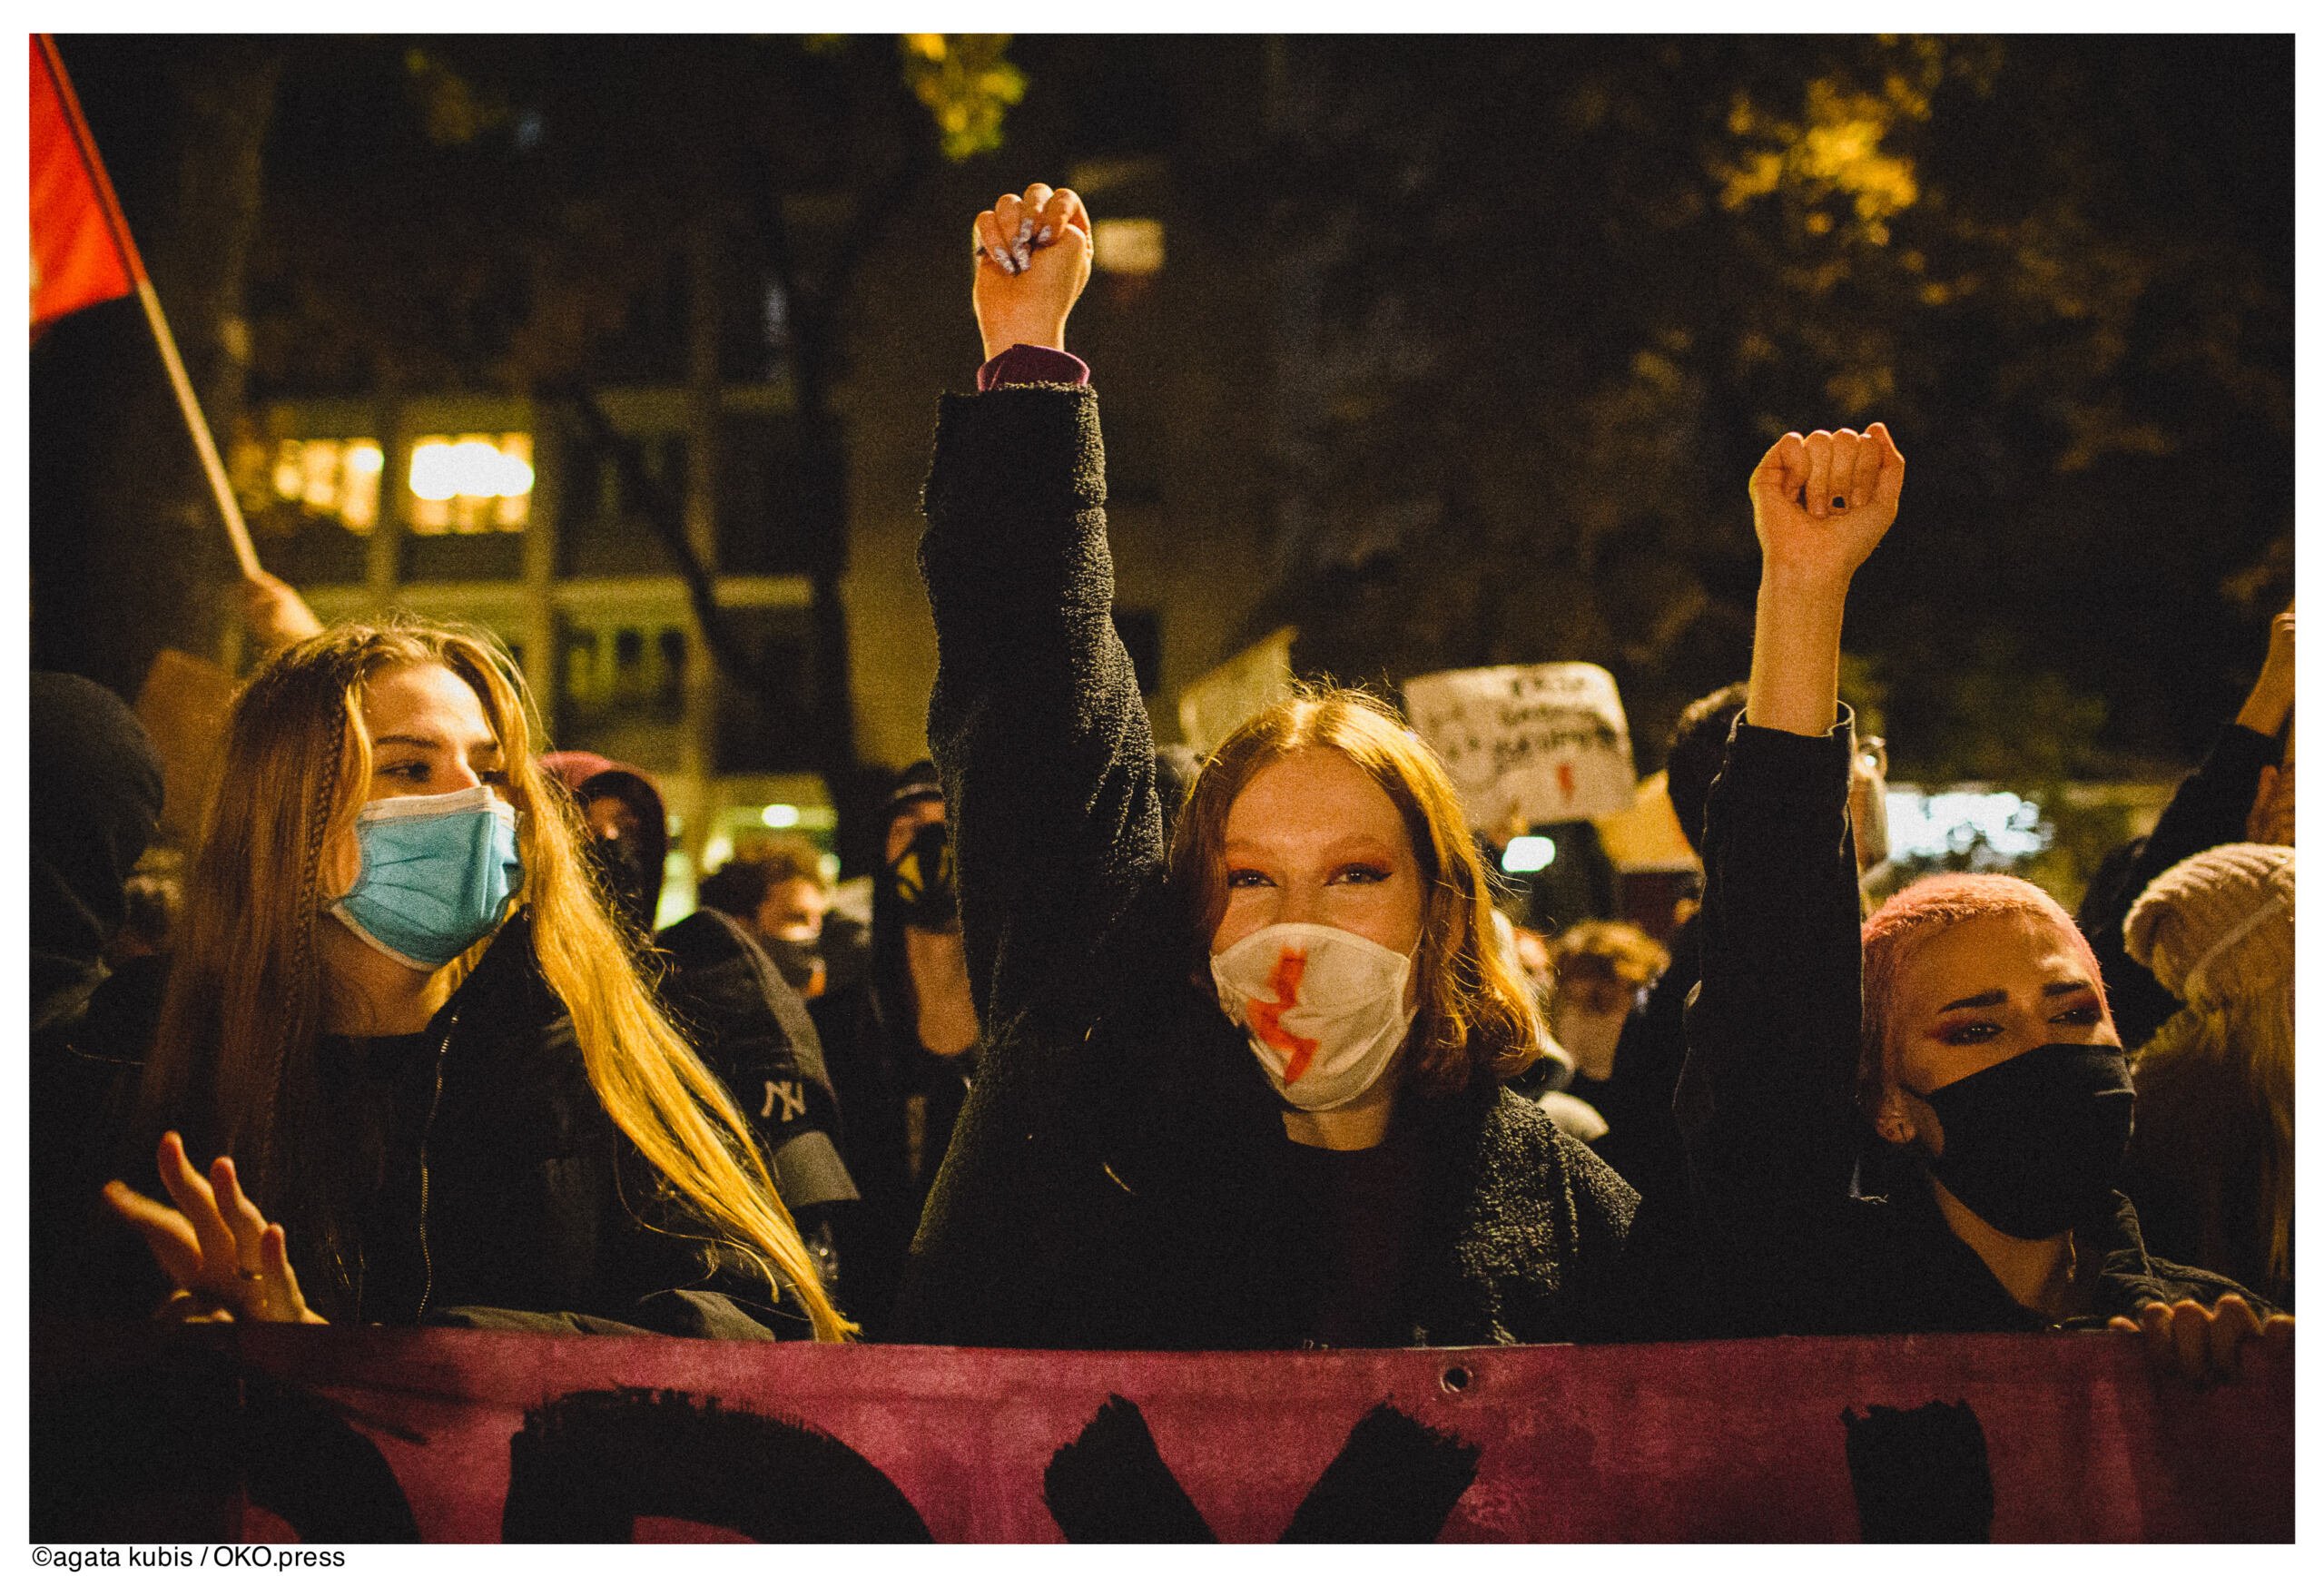 Warszawa, protest 25.10.2020